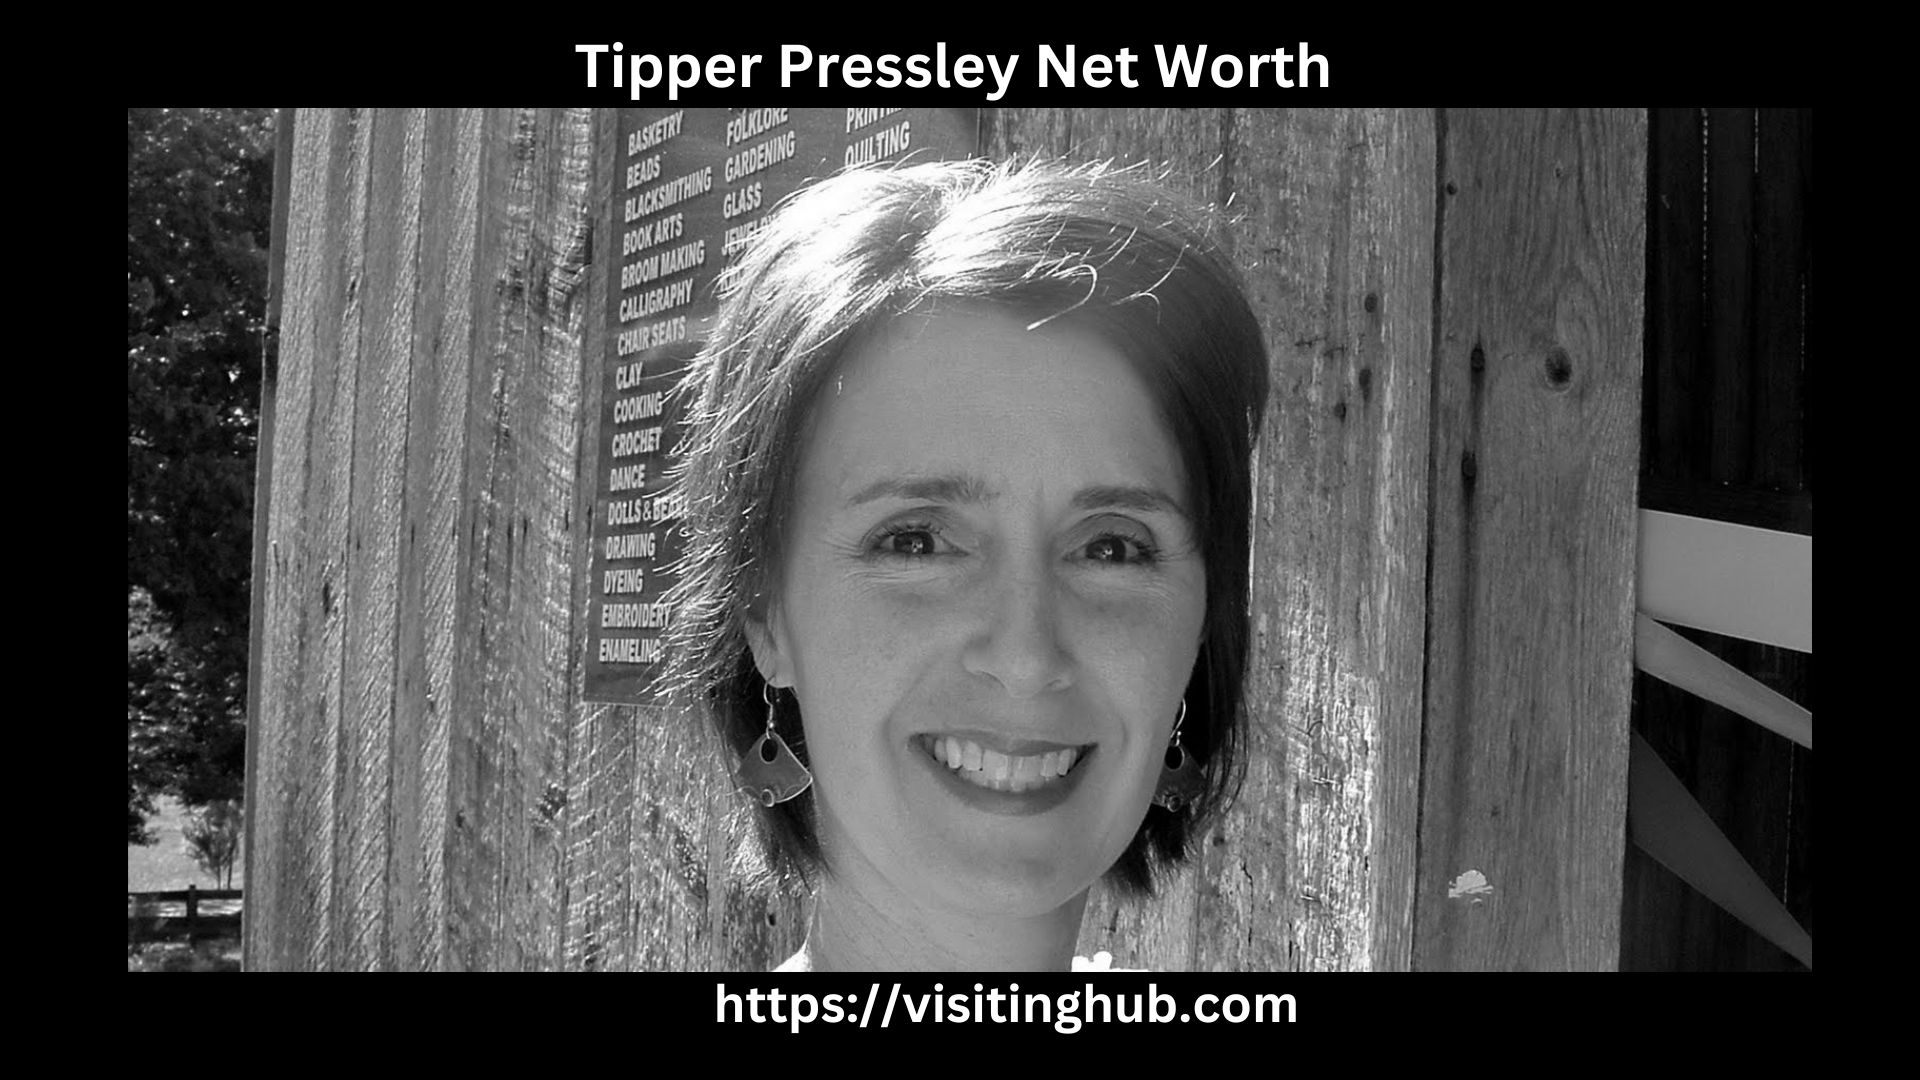 Tipper Pressley Net Worth